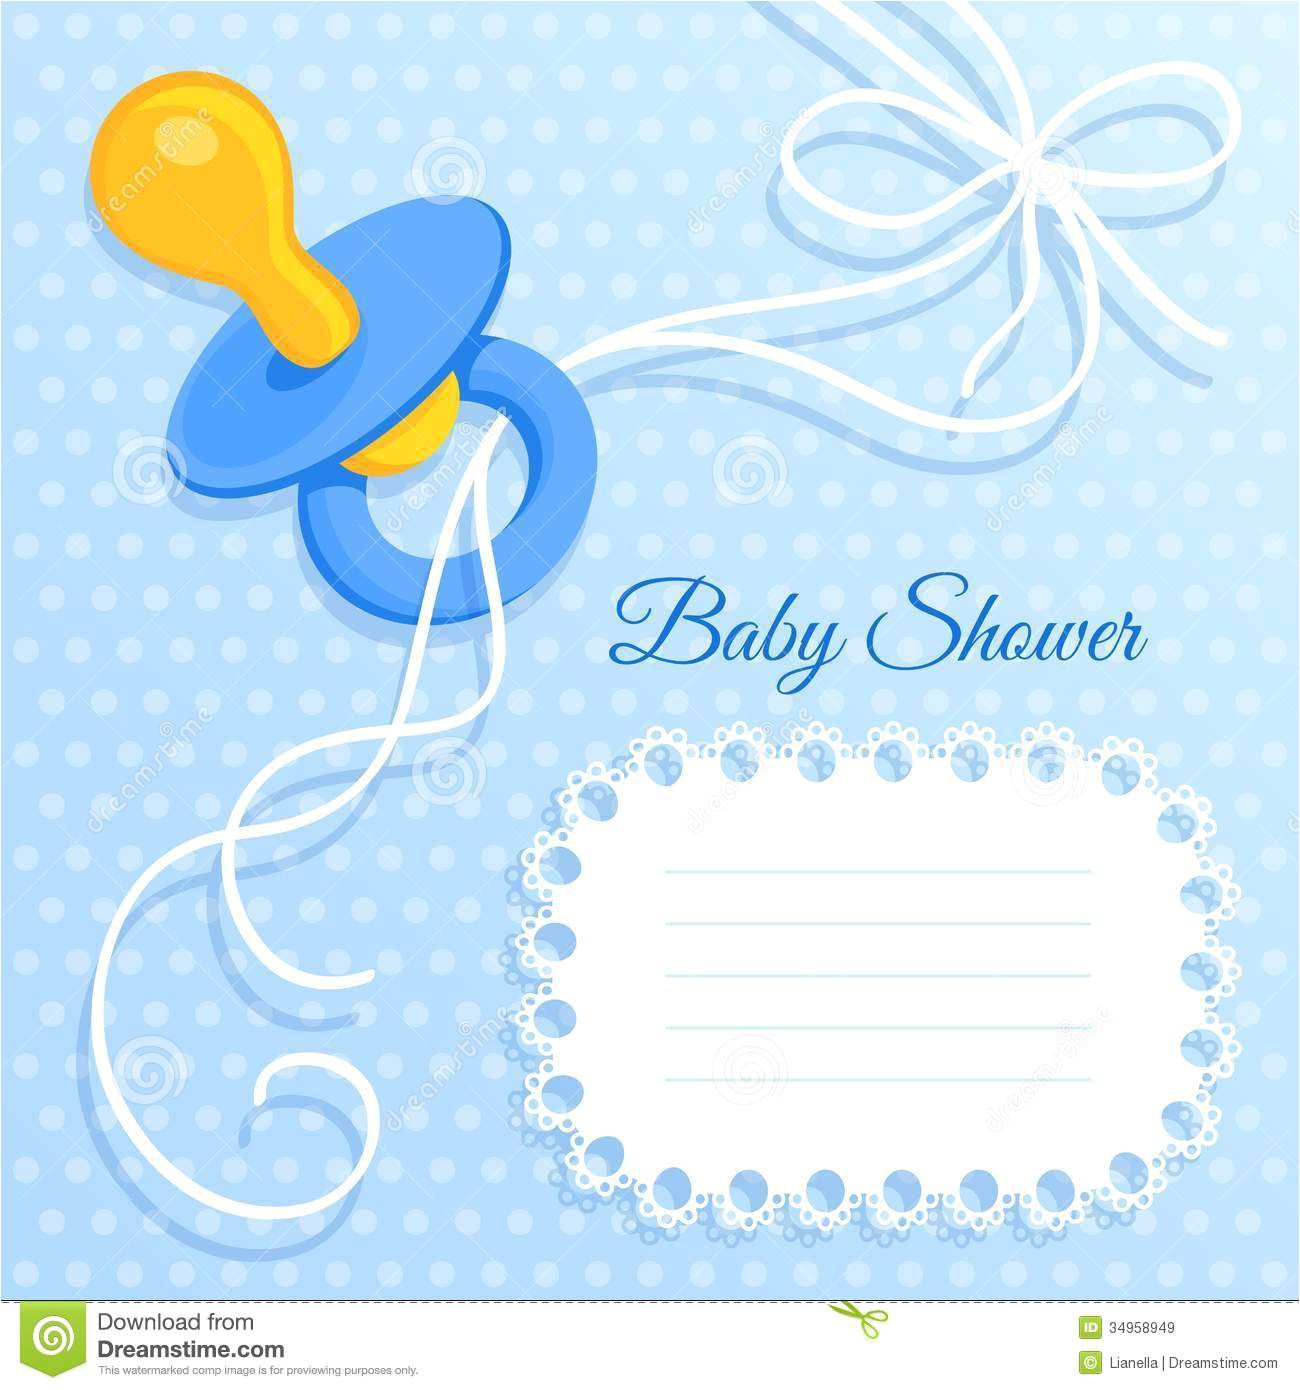 baby shower invitation designs free